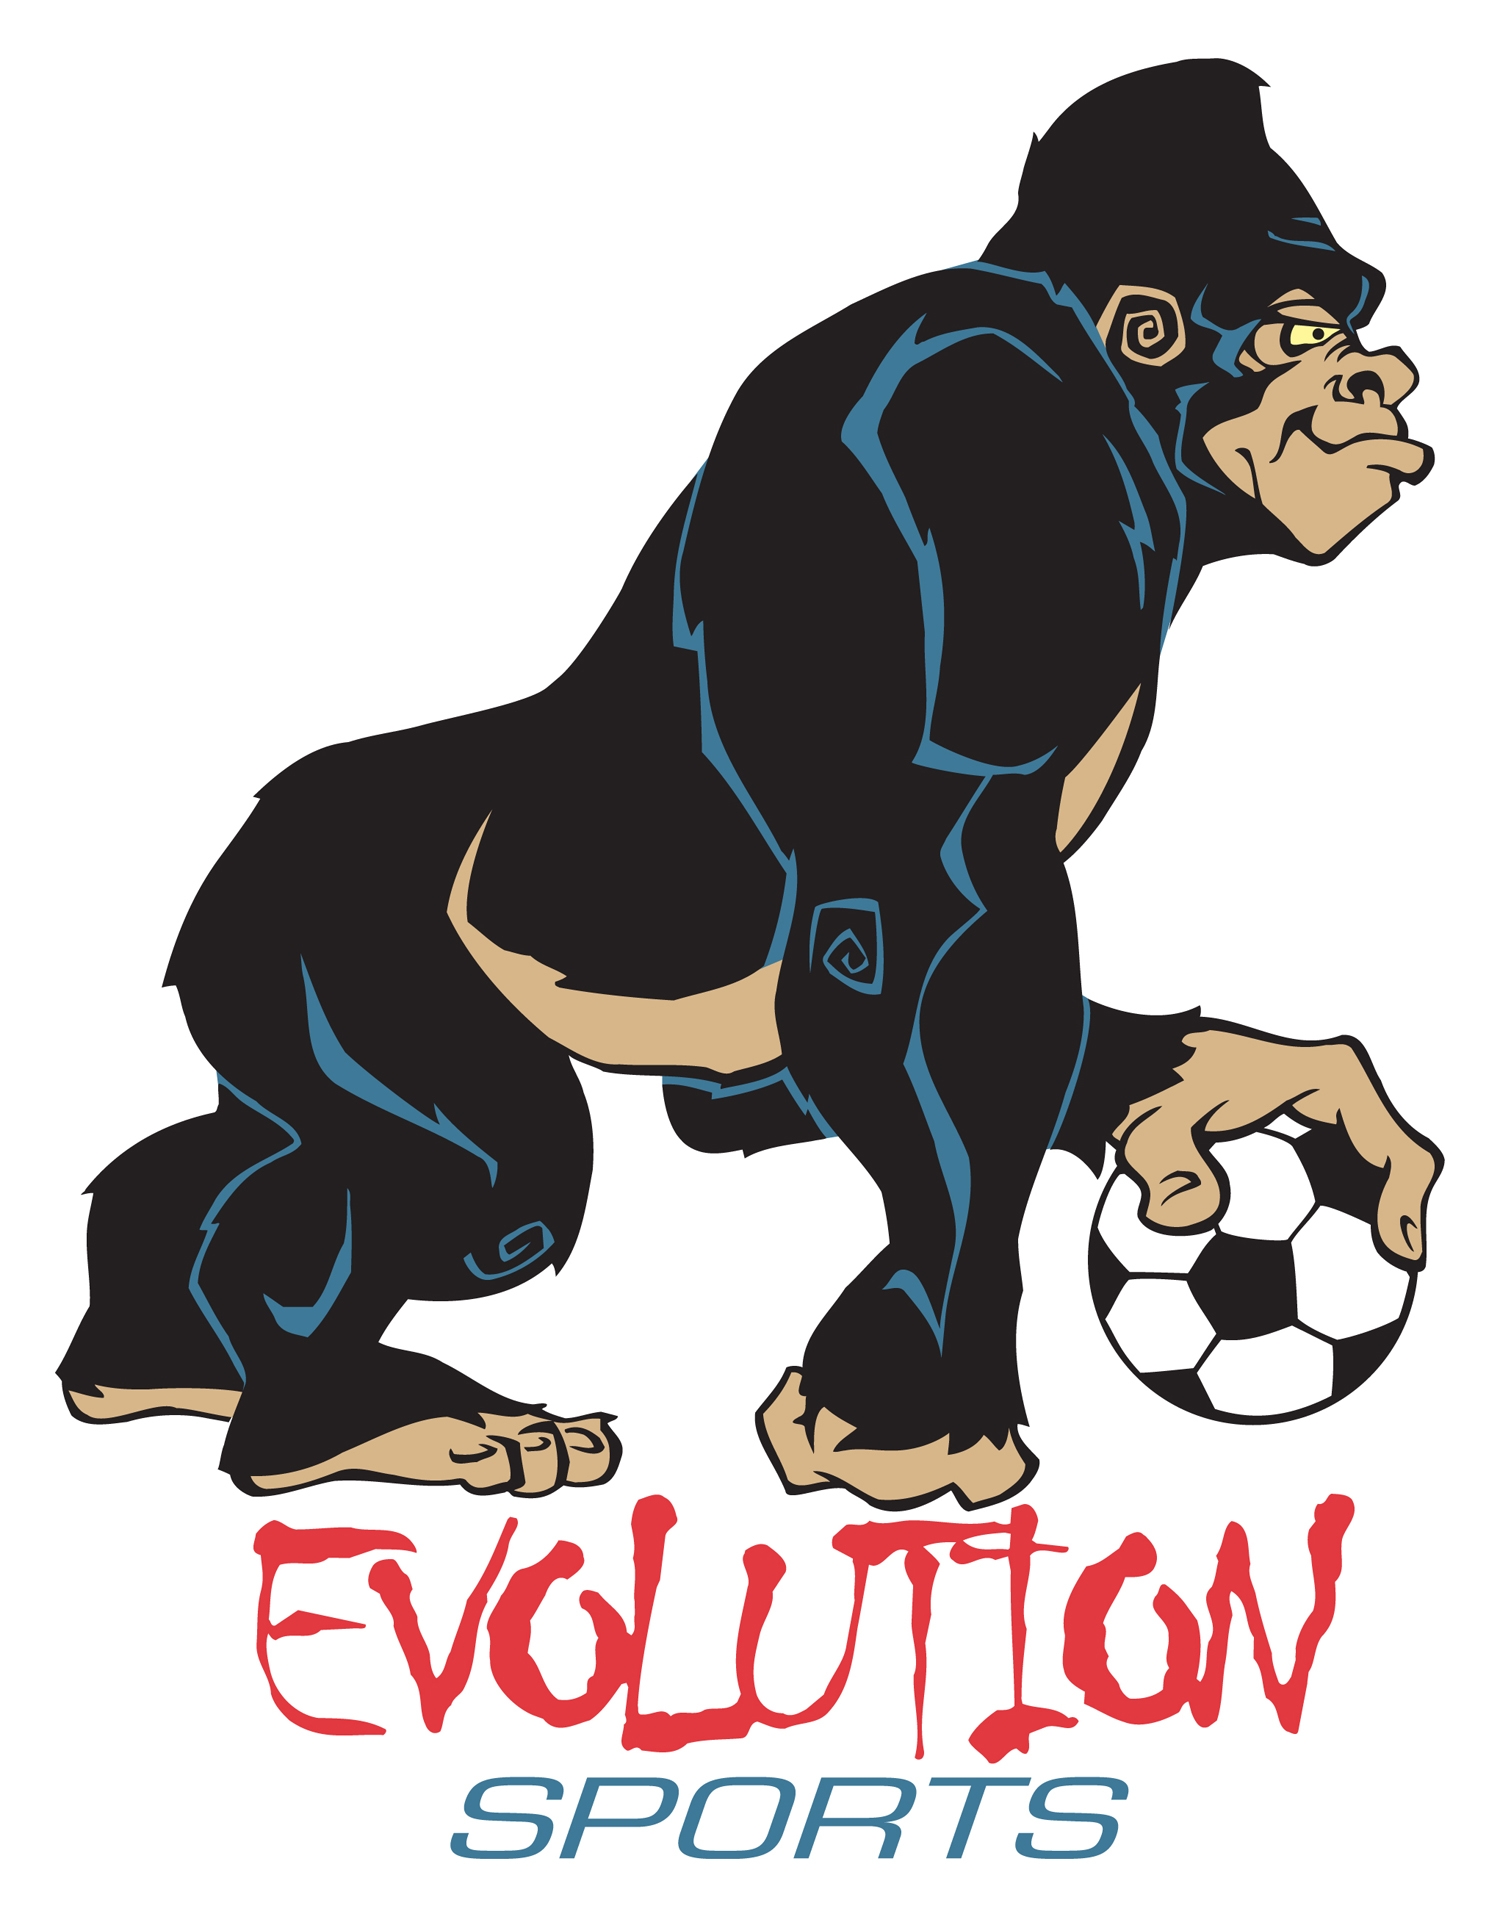 Evolution Sports